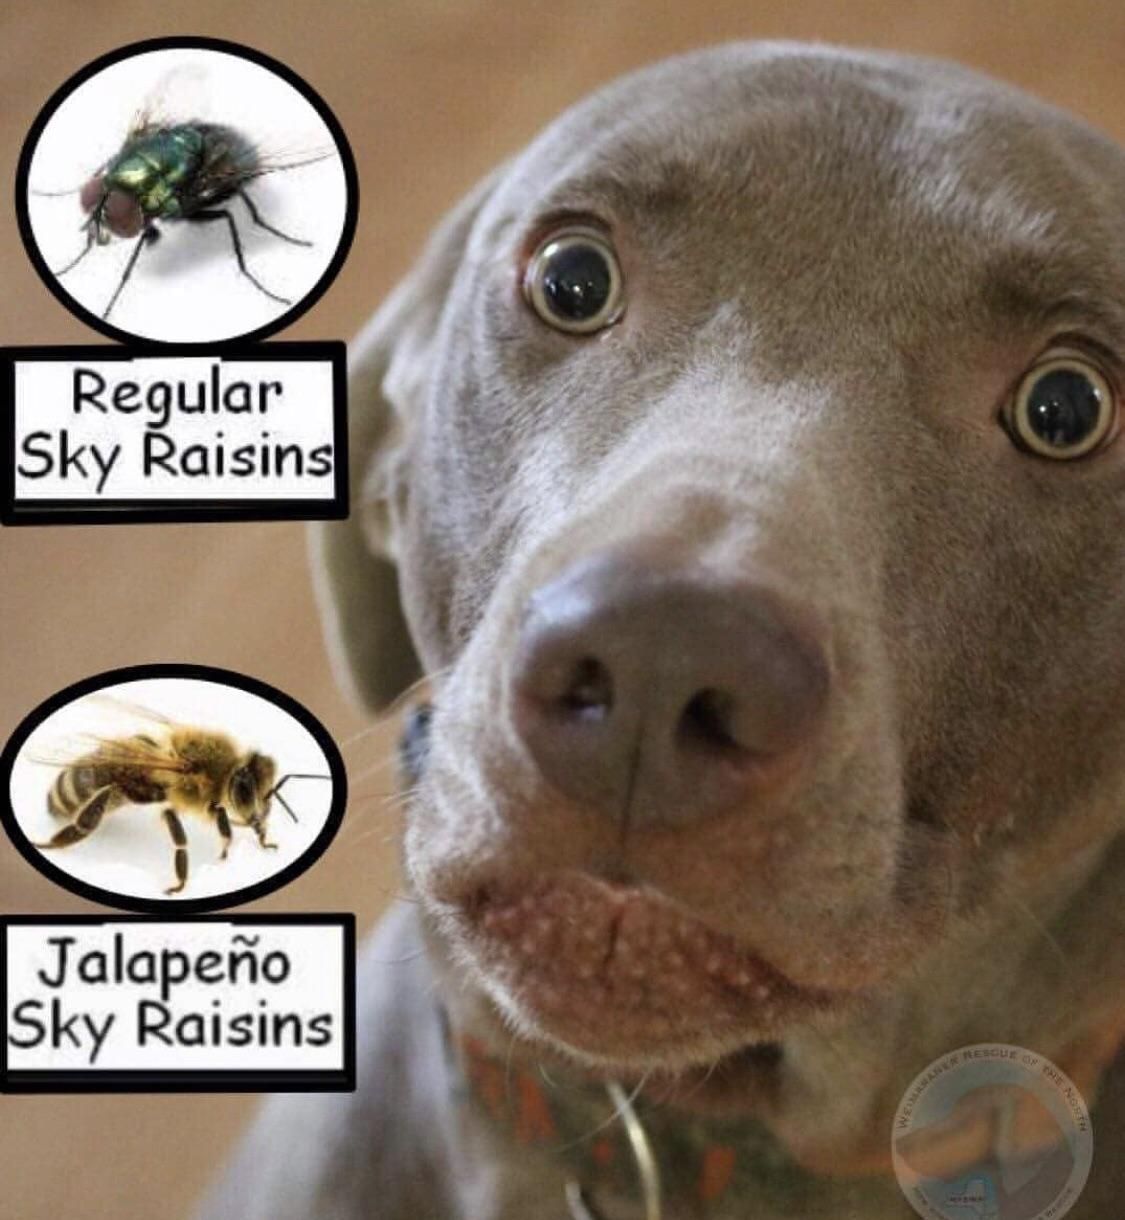 Jalapeño Sky Raisins. Those with labs will understand